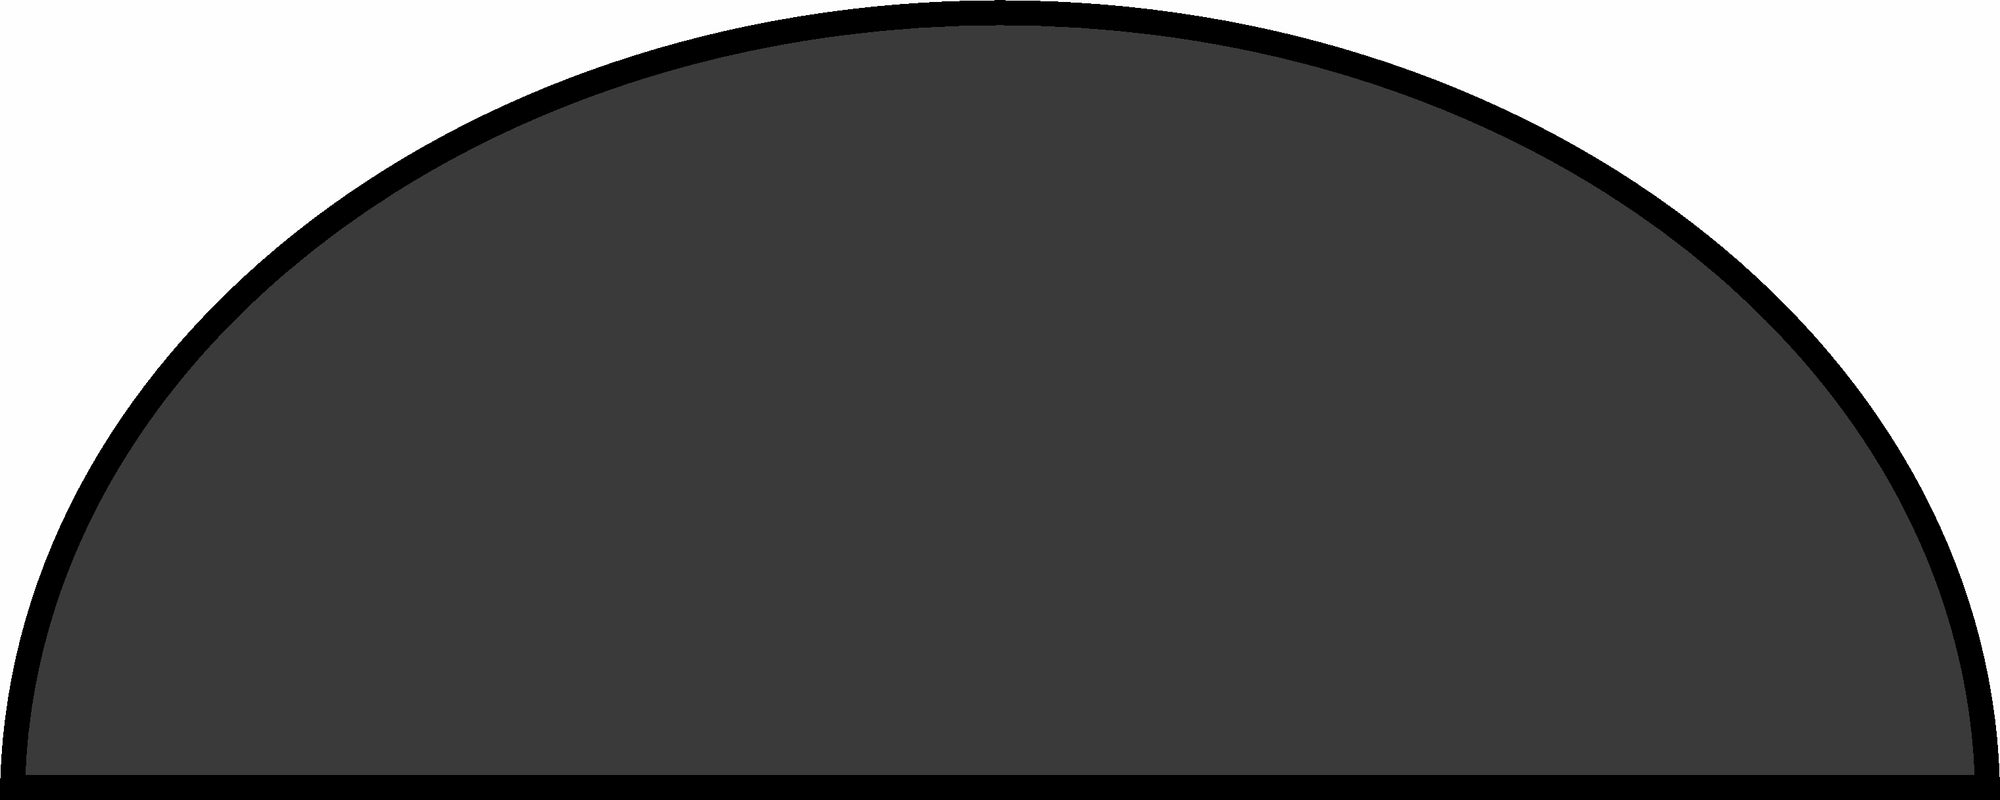 Blank Circular Segment § 4 X 10 Luxury Berber Inlay - The Personalized Doormats Company